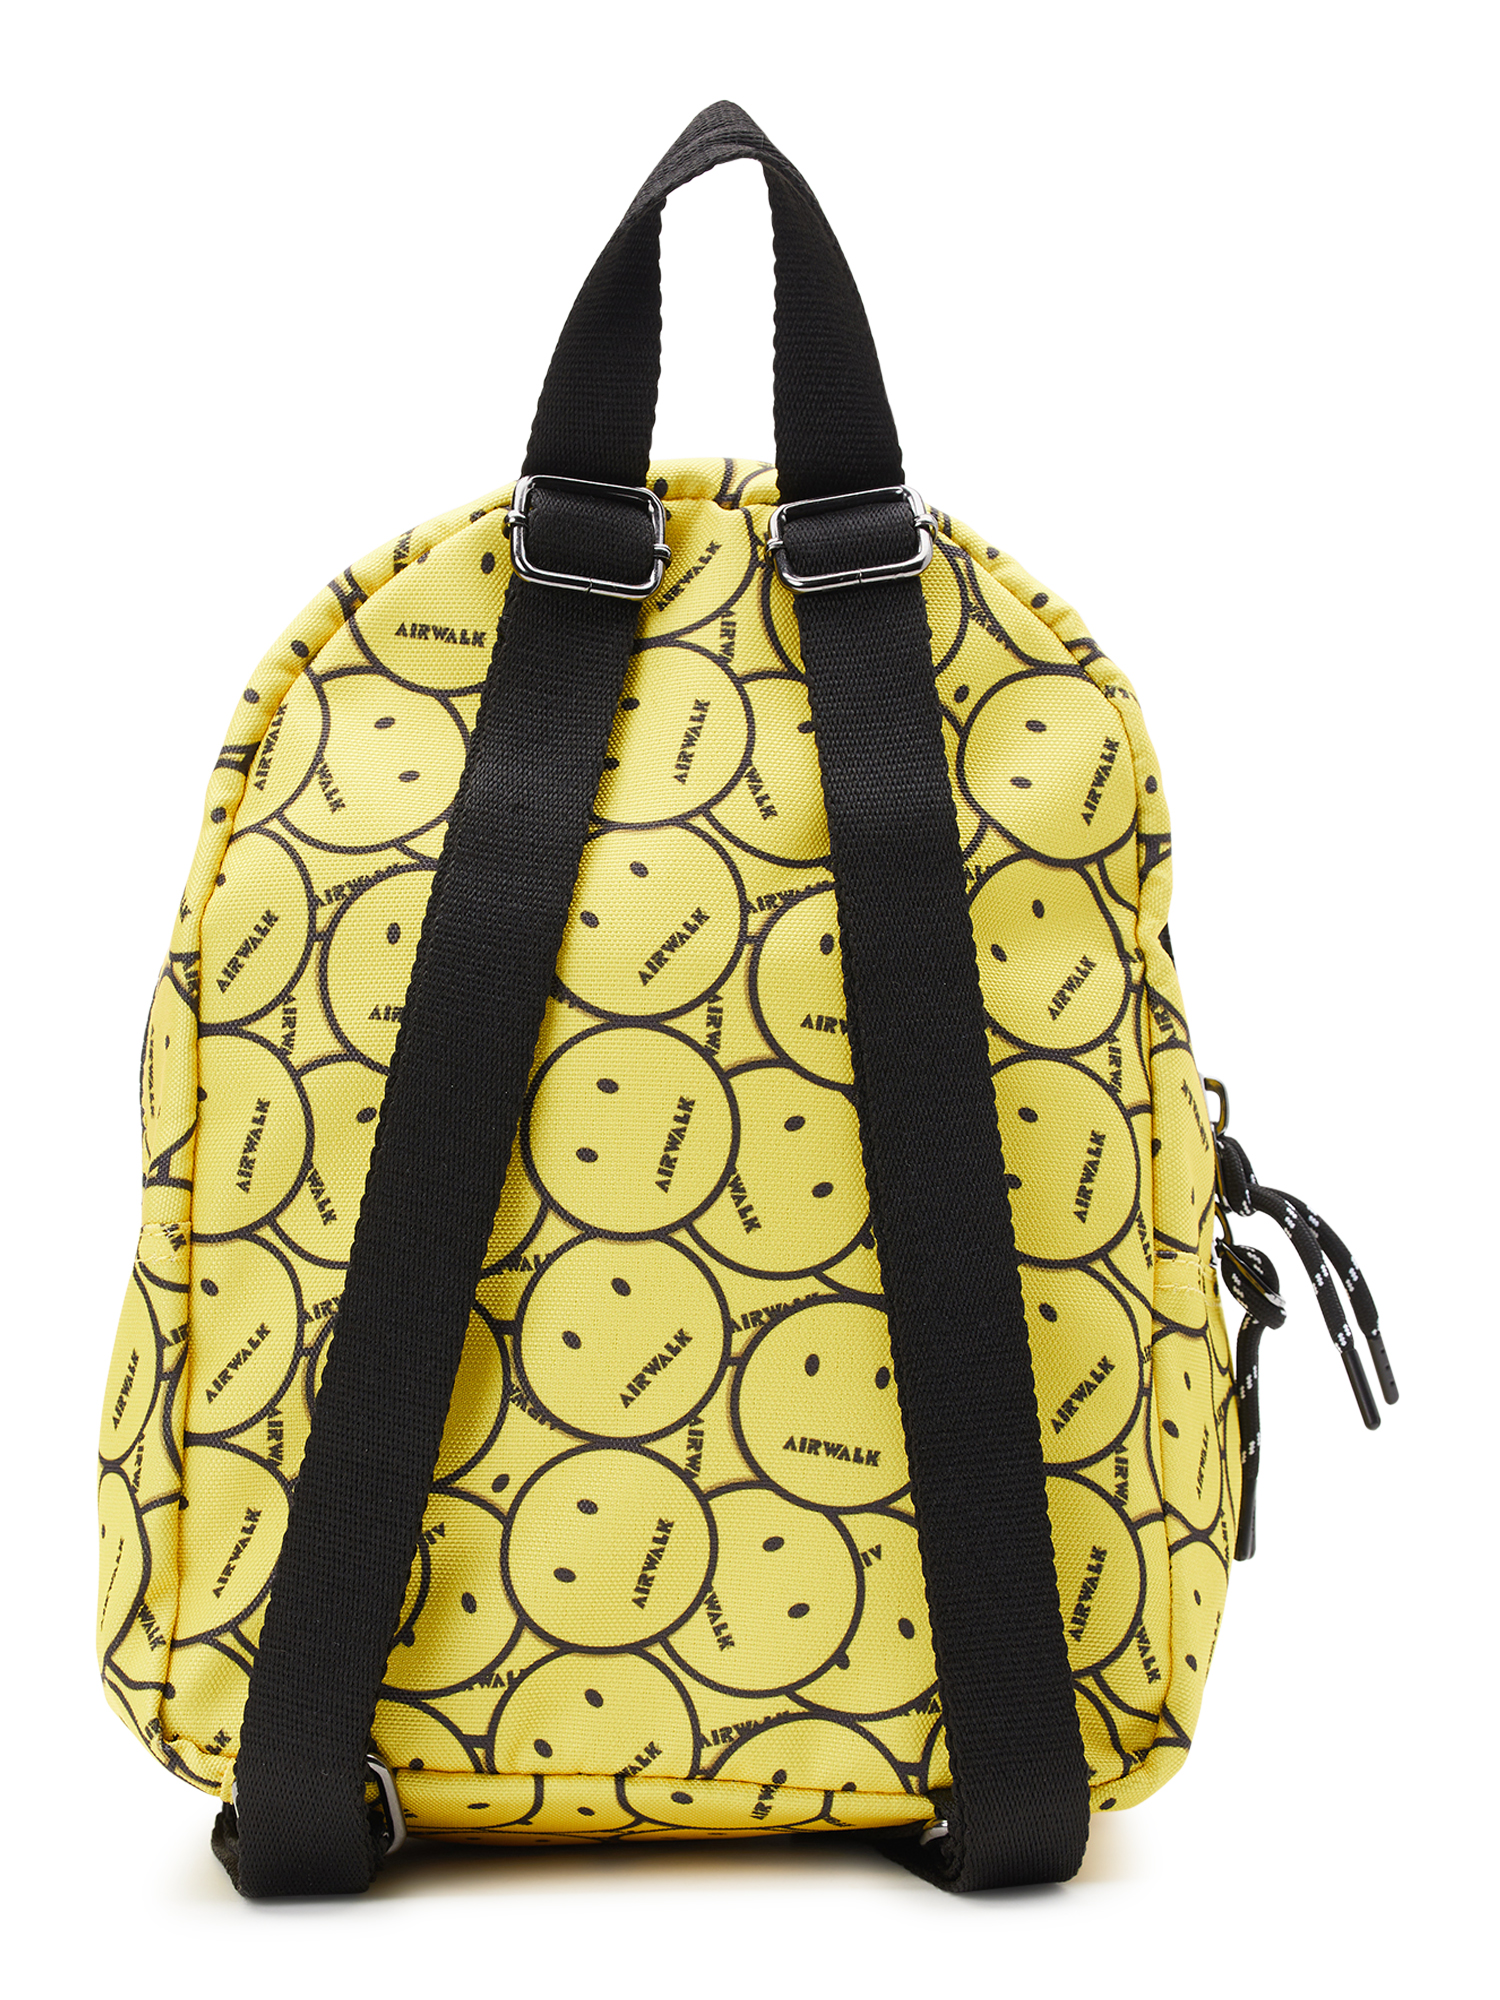 Airwalk Unisex Mini 10" Backpack, Smiley Yellow - image 4 of 6